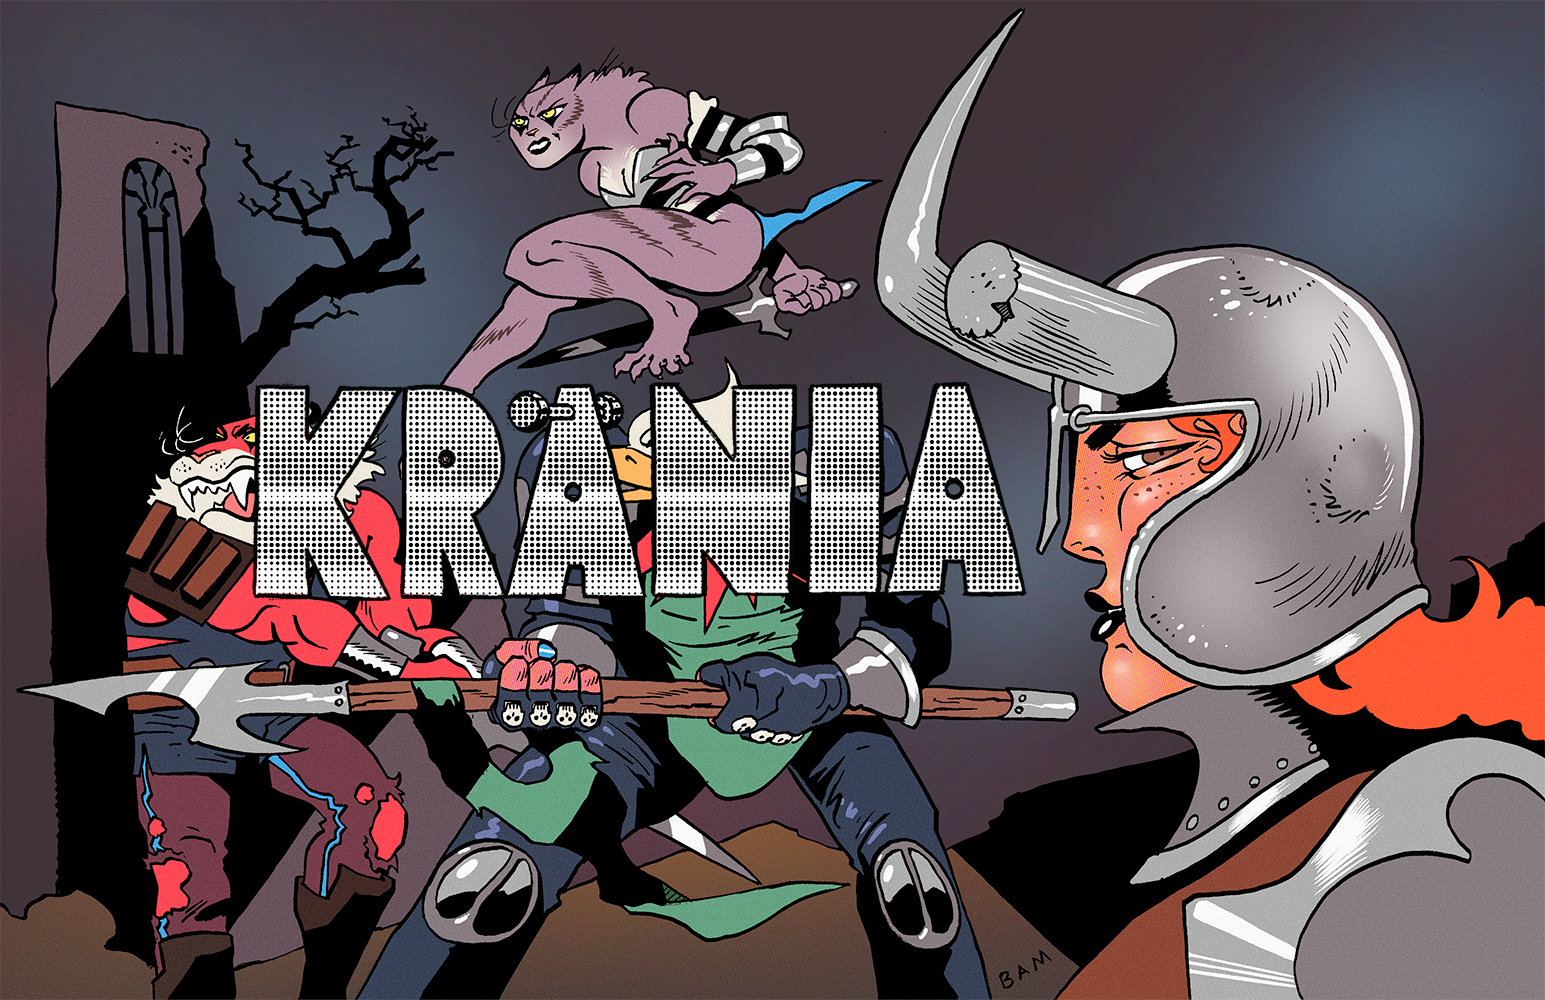 Krania #2 by Brian McCray